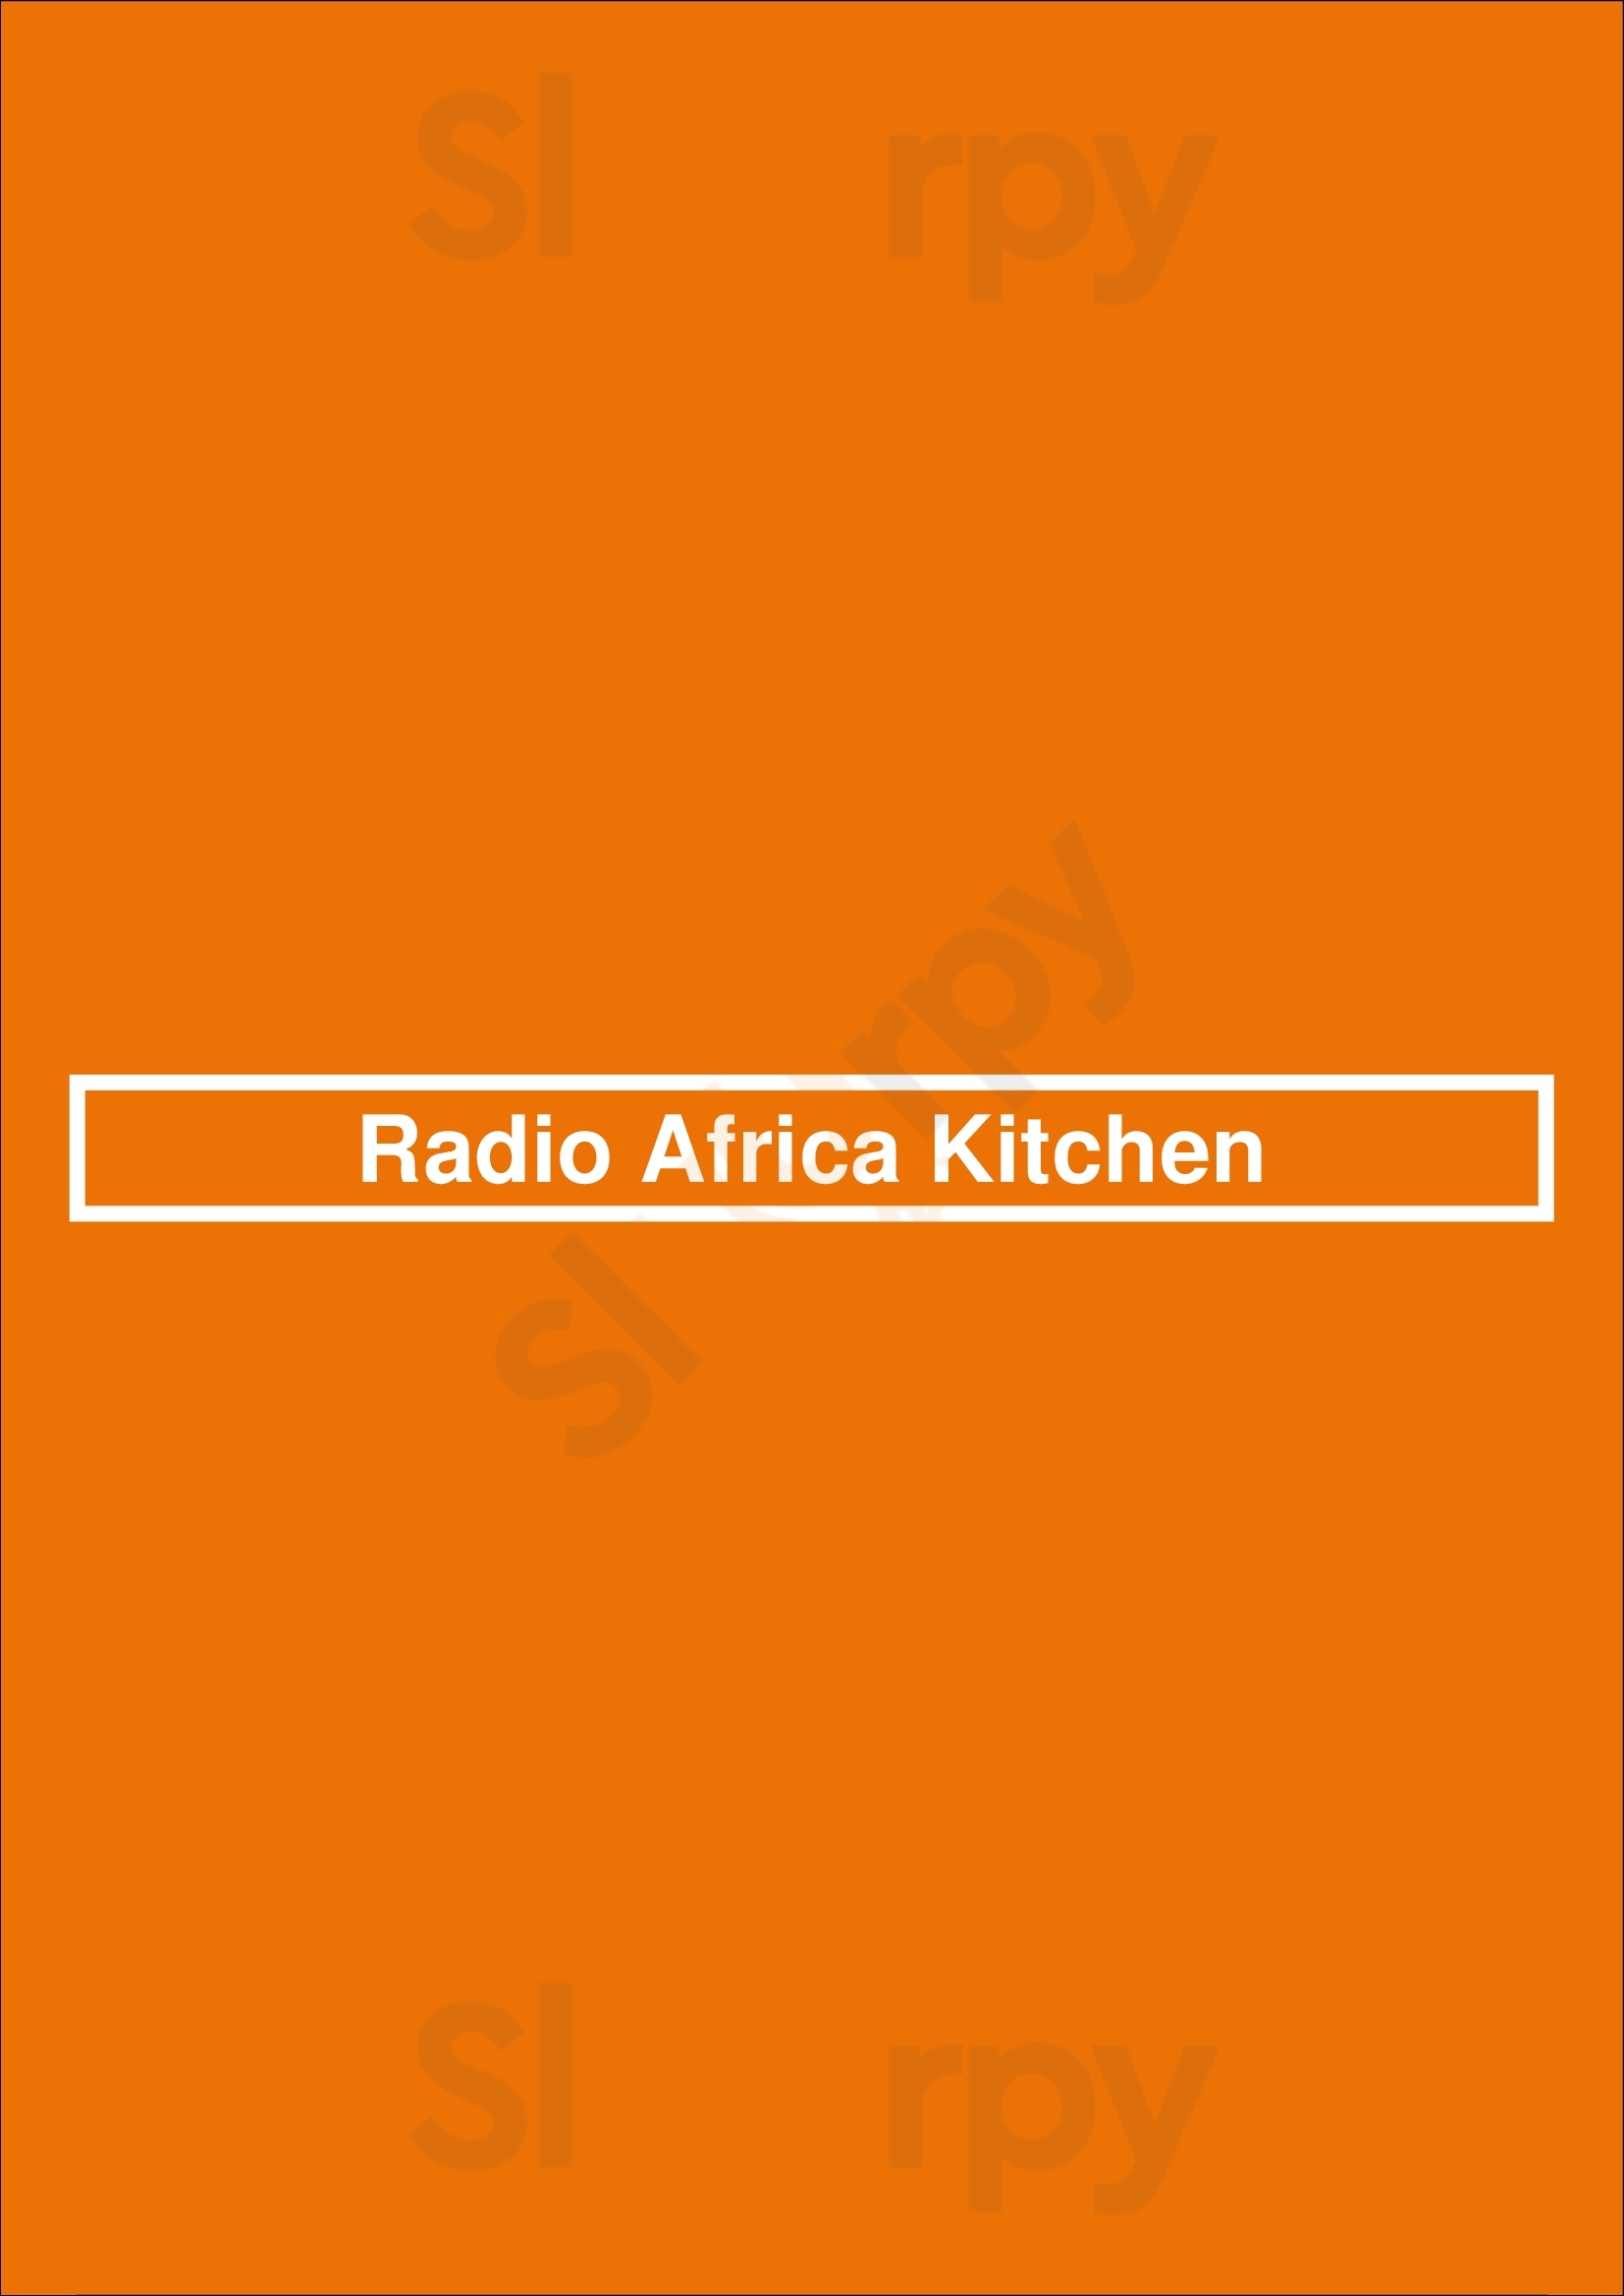 Radio Africa Kitchen San Francisco Menu - 1